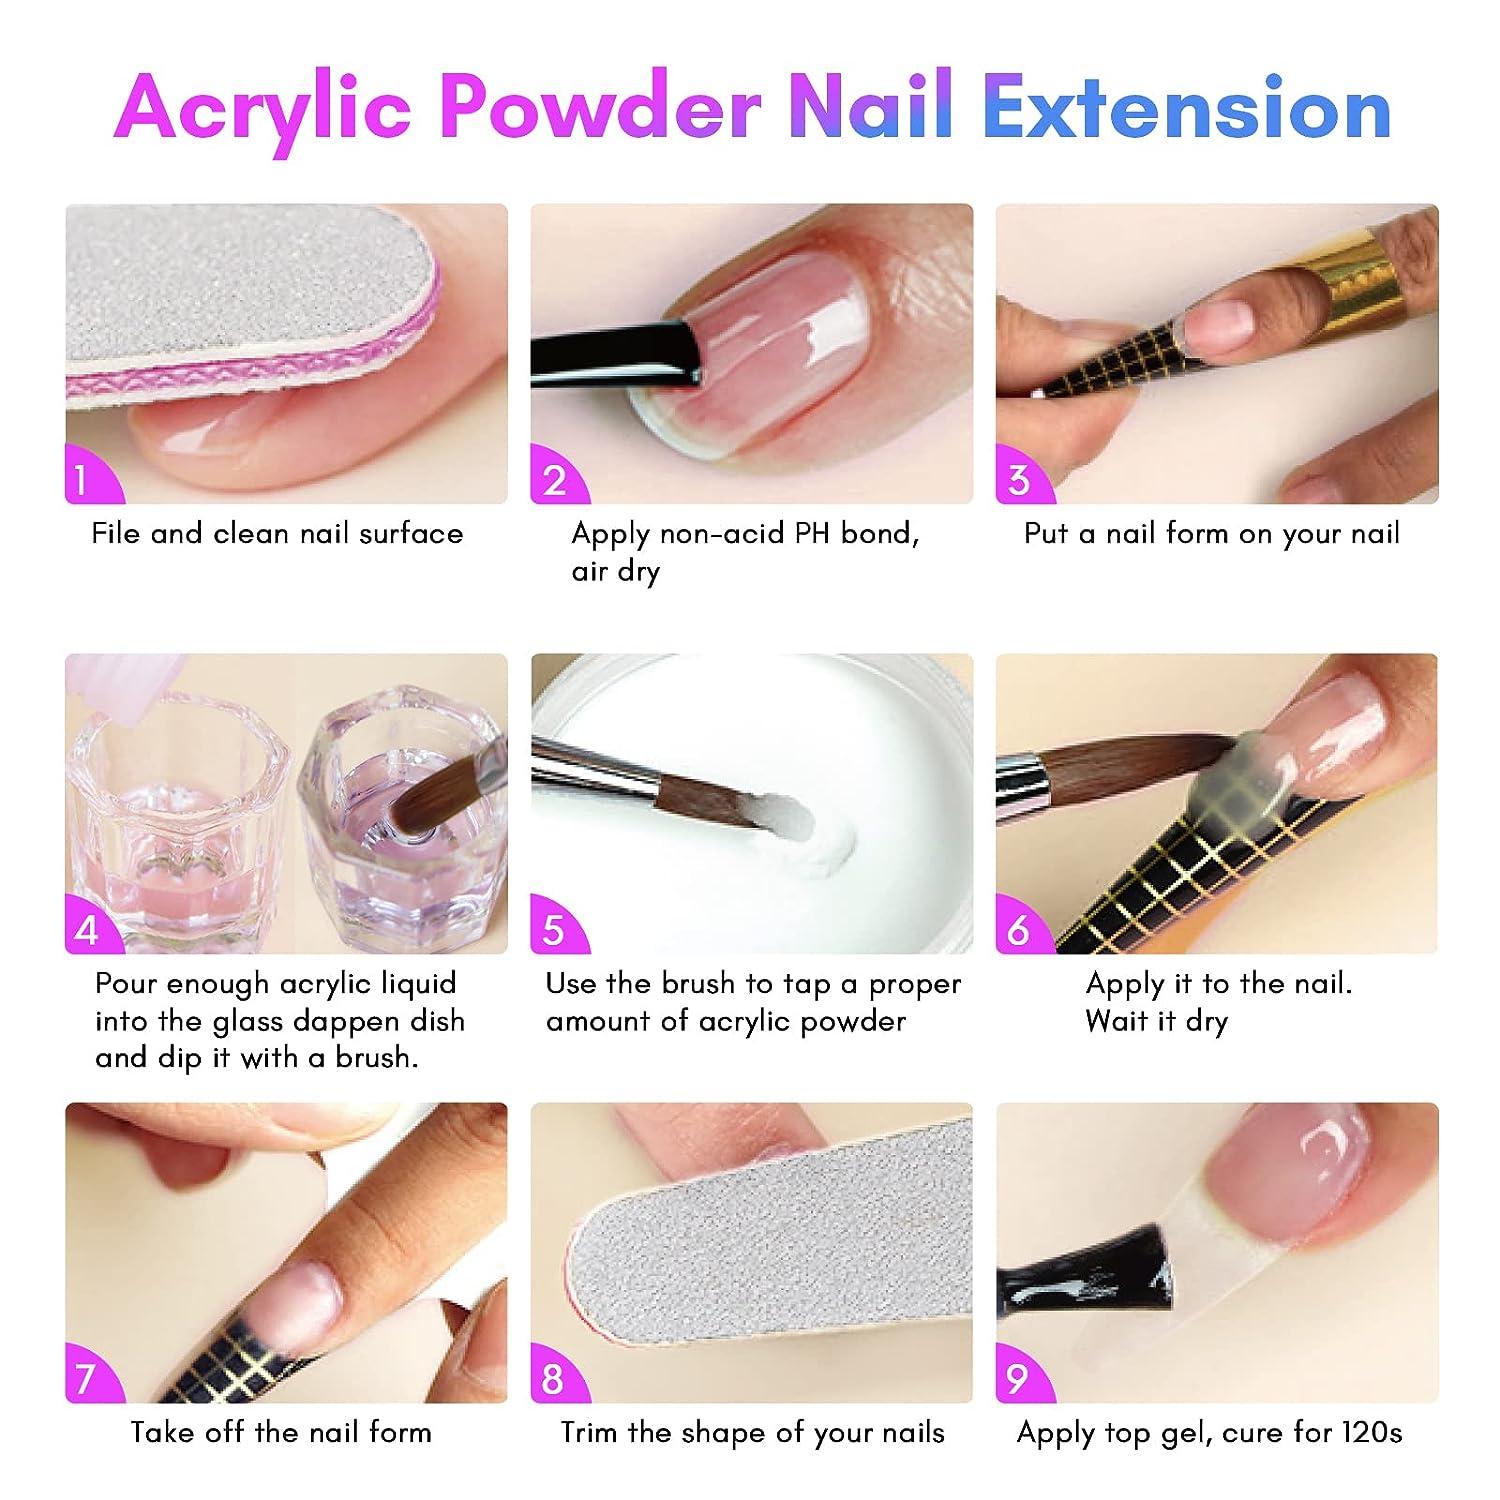 Saviland Acrylic Nail Brush Size 8 - Nail Brushes For Acrylic Application  With Acrylic Powder And Liquid Nail Supplies Acrylic Brushes For Nails  Extension & Carving Home DIY